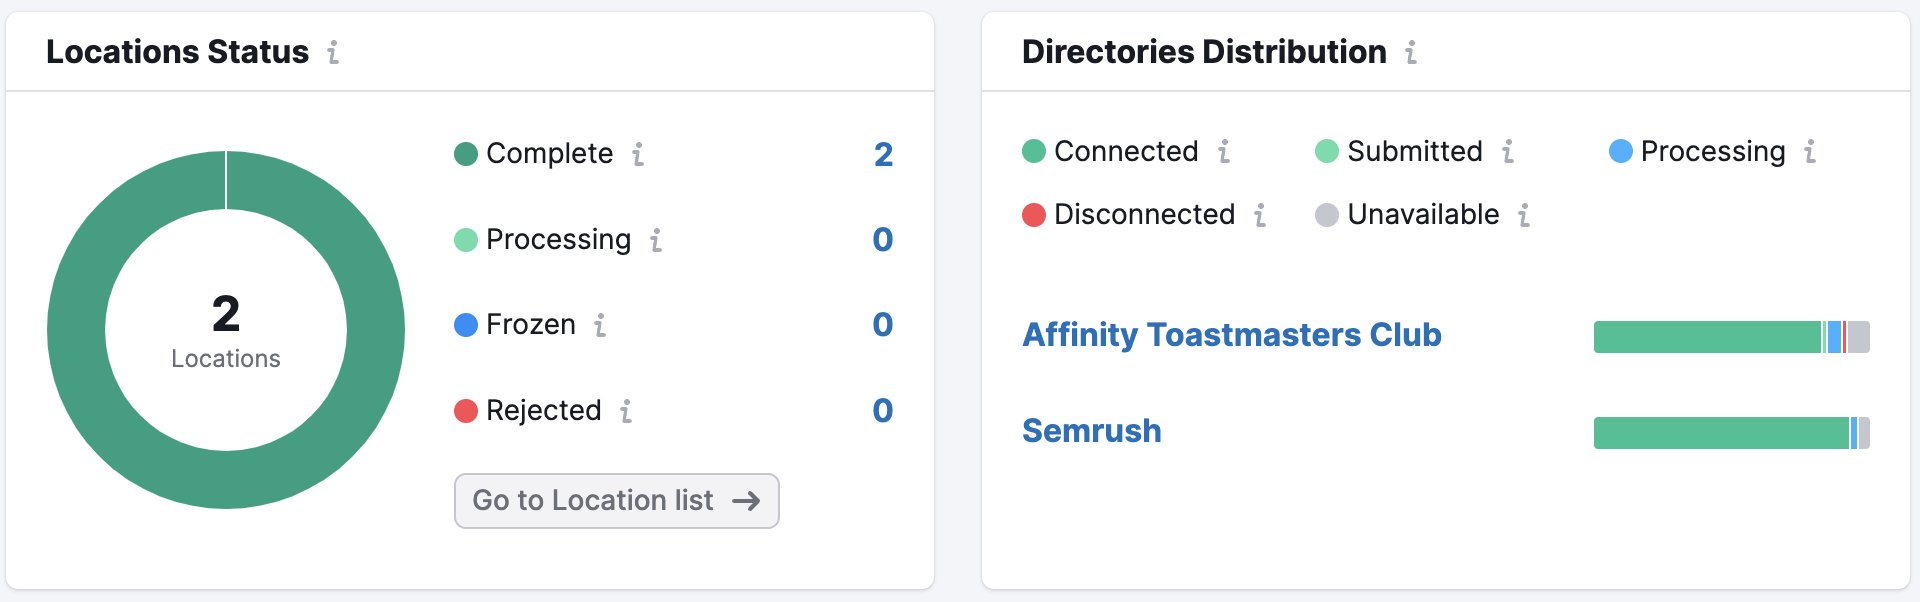 Location Status and Directories Distribution widgets. 